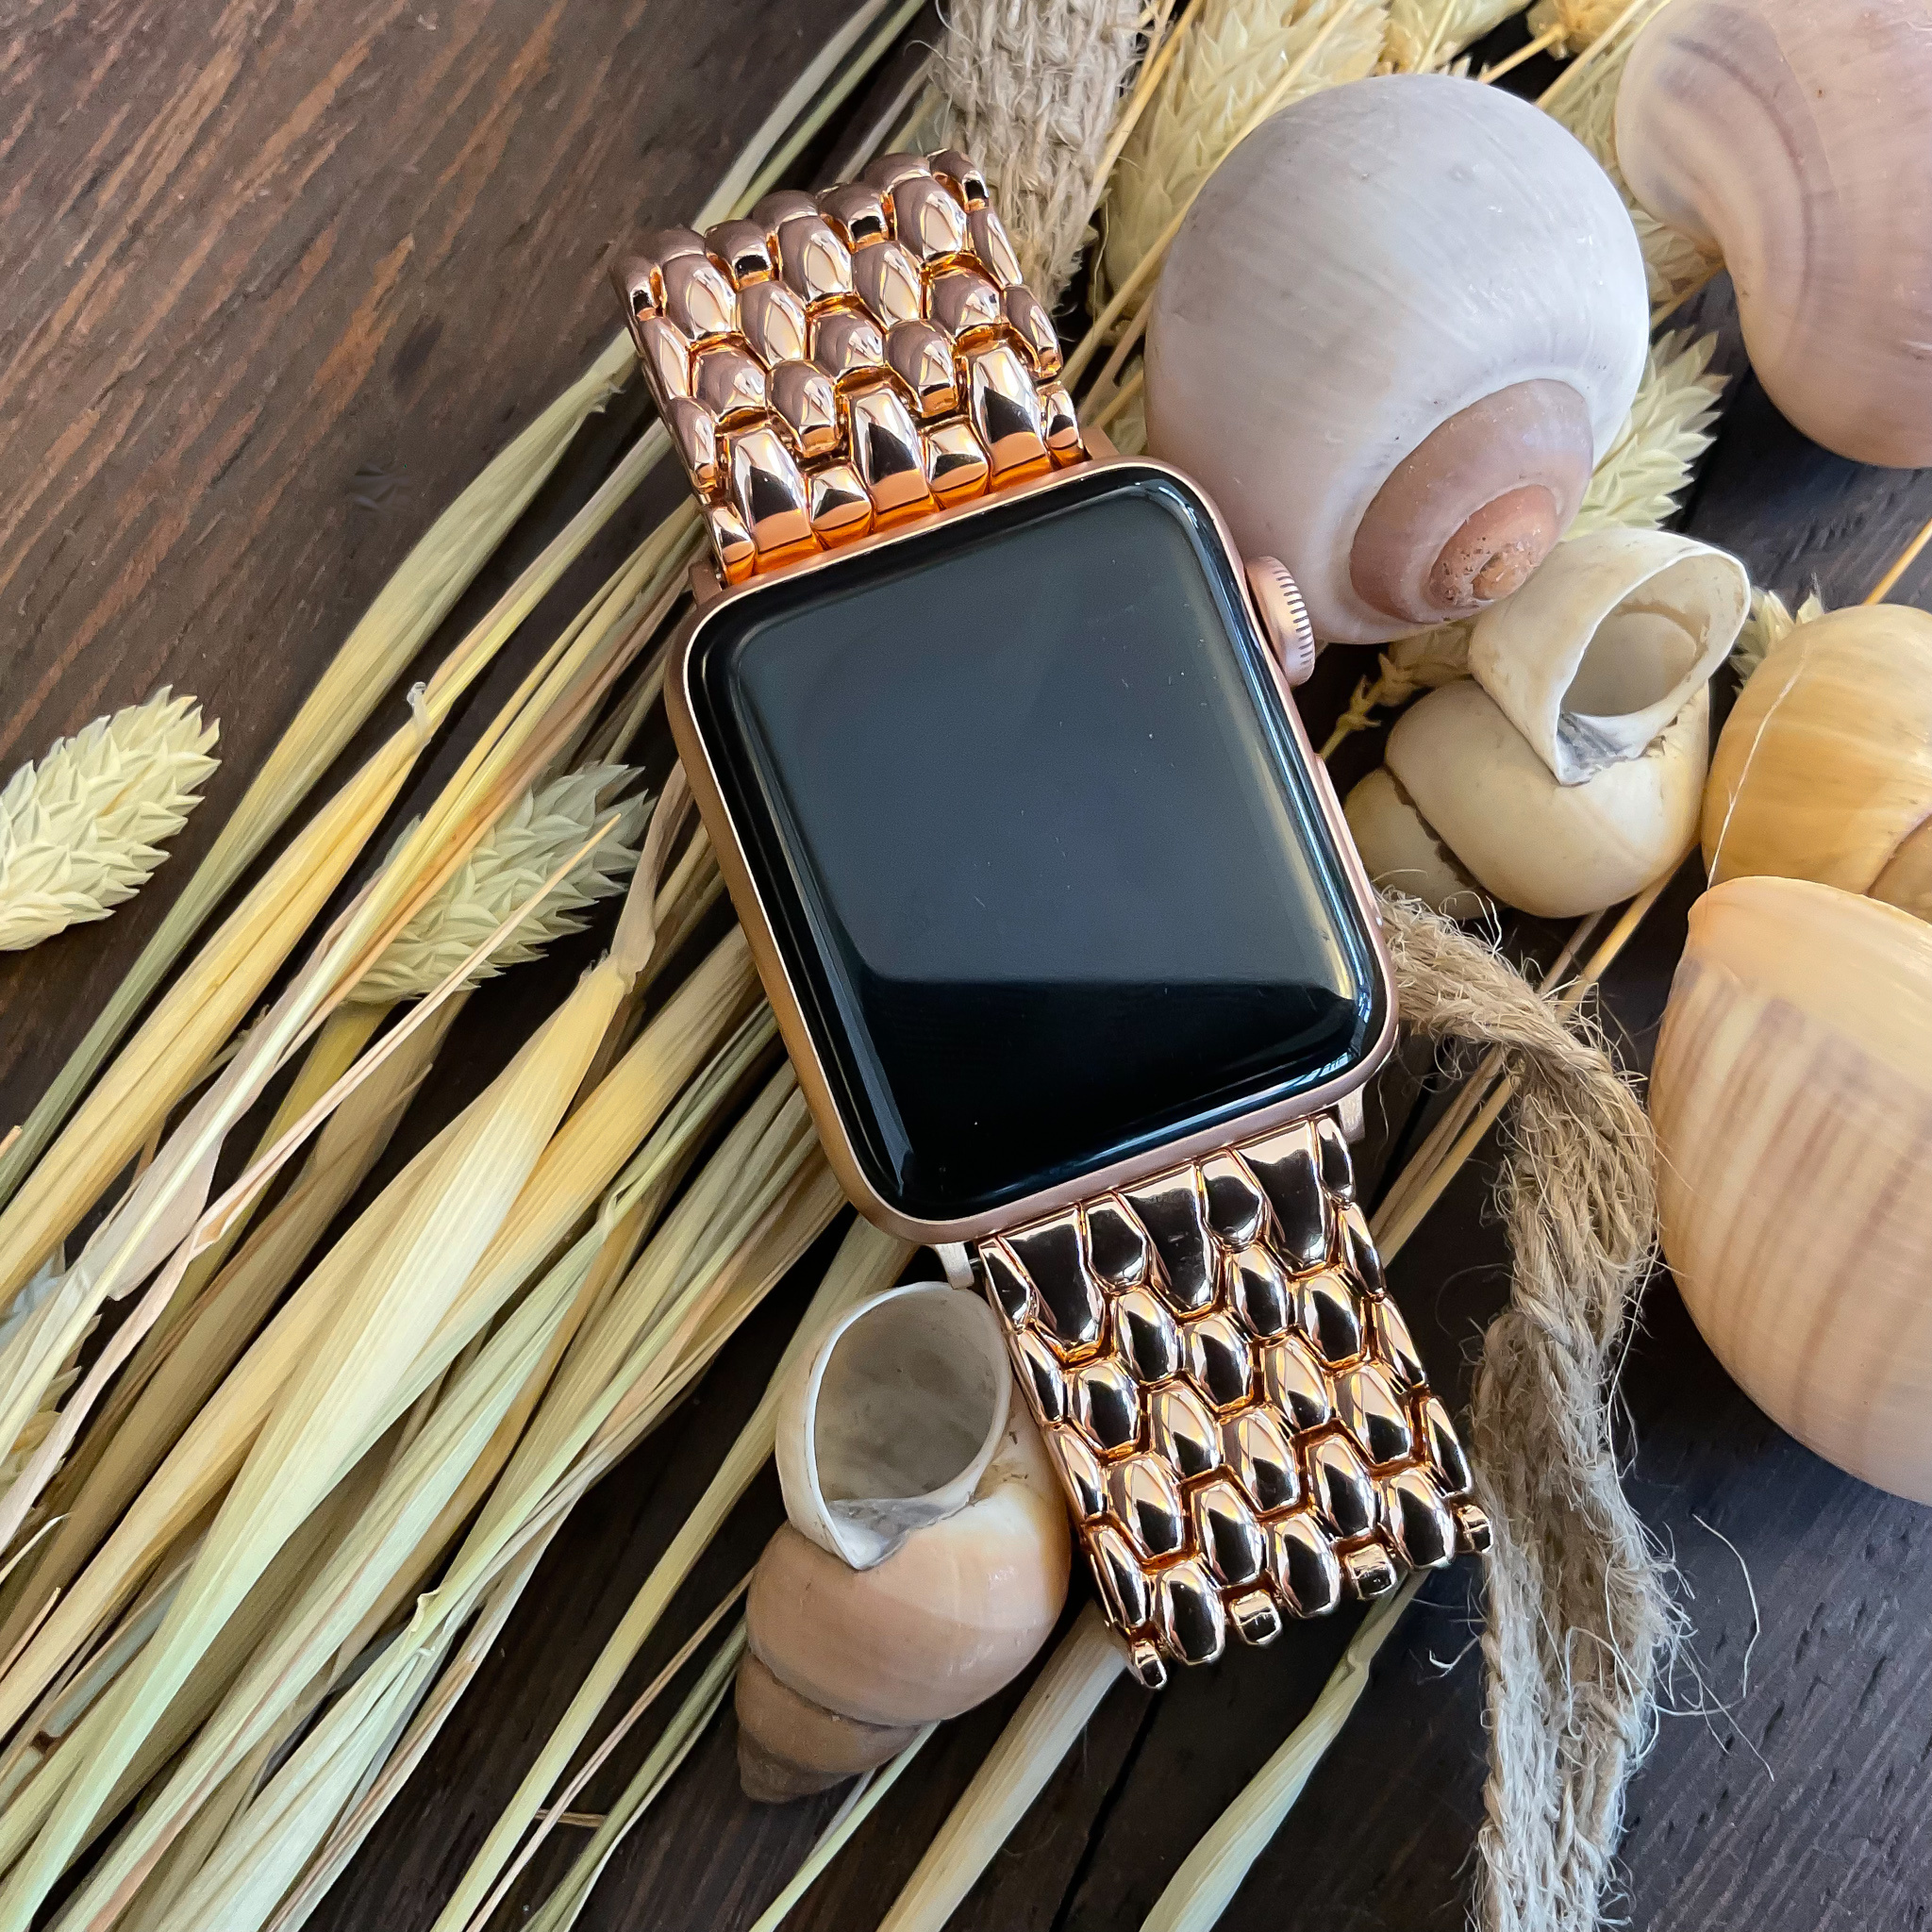 Apple Watch draak stalen schakel band - rose goud